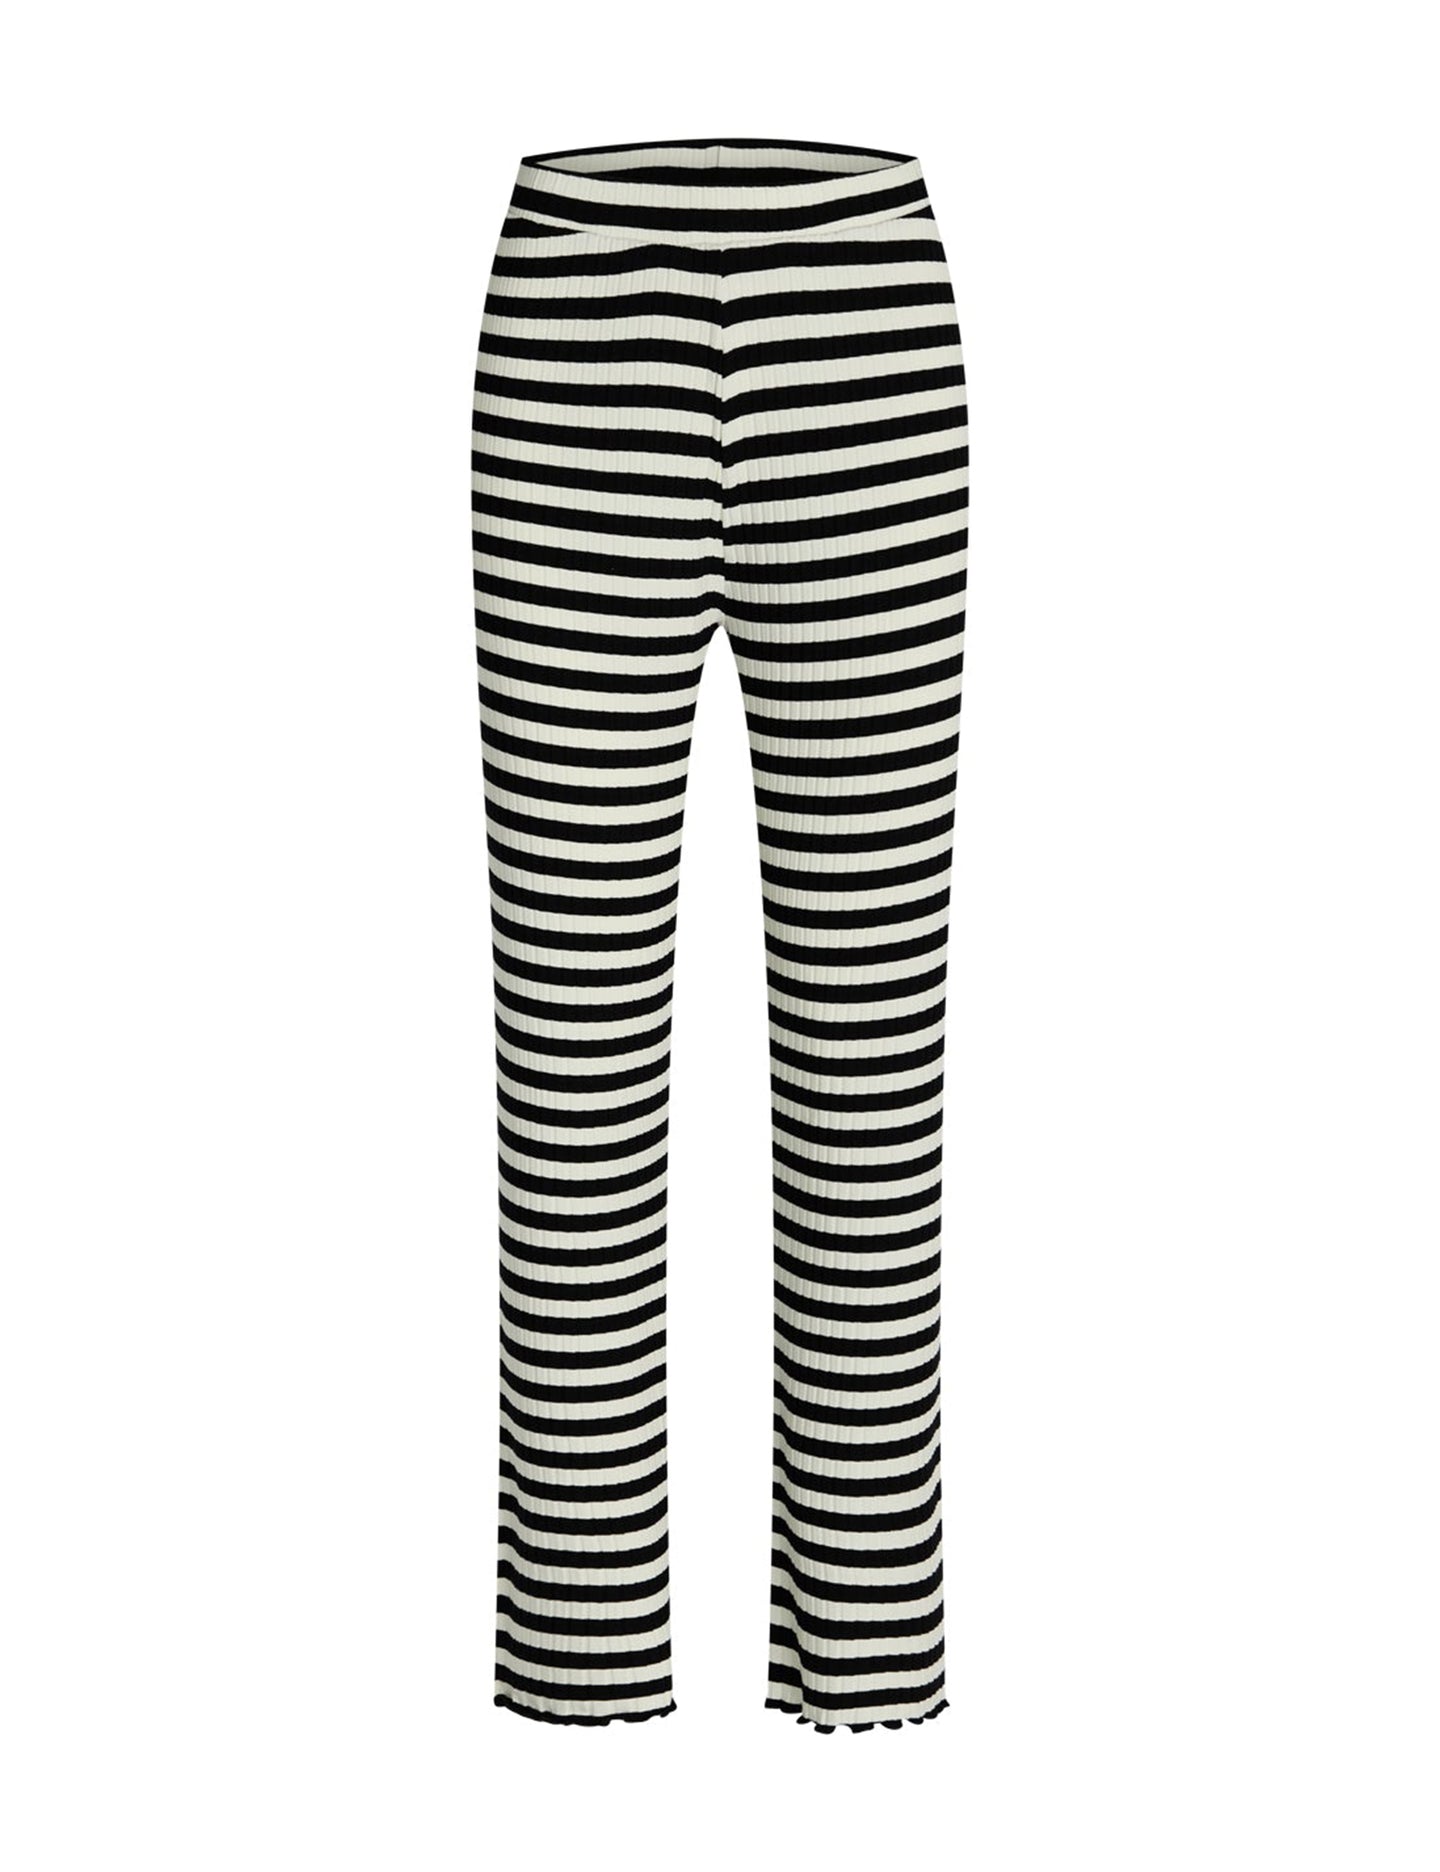 5x5 Stripe Lonnie Pants - Stripe/Vanilla Ice